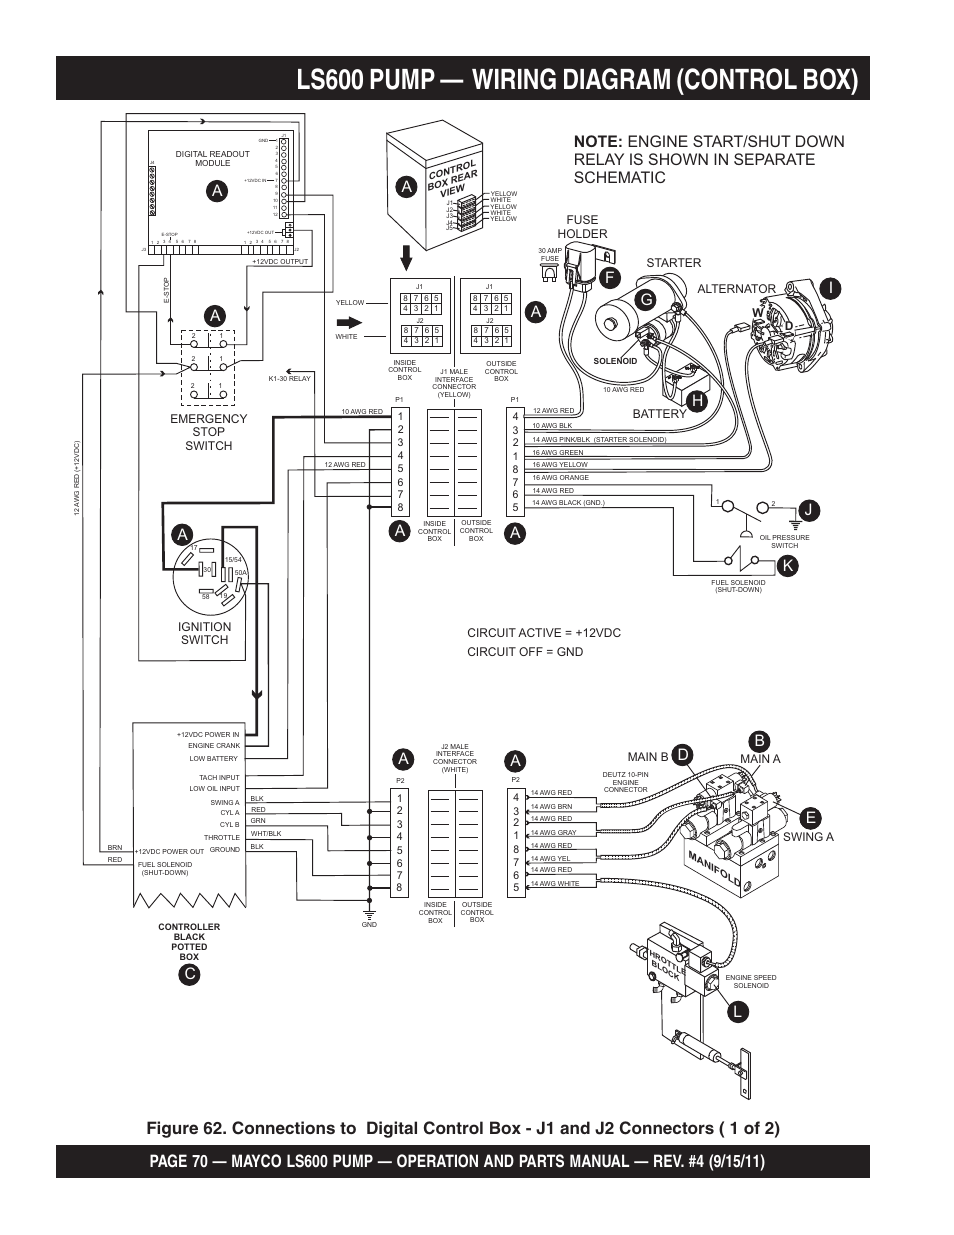 Ls600 pump — wiring diagram (control box), Bd e e, Fuse holder | Multiquip  Mayco Concrete Pump LS600 User Manual | Page 70 / 152 | Original mode  Concrete Pump Wiring Diagram    Manuals Directory